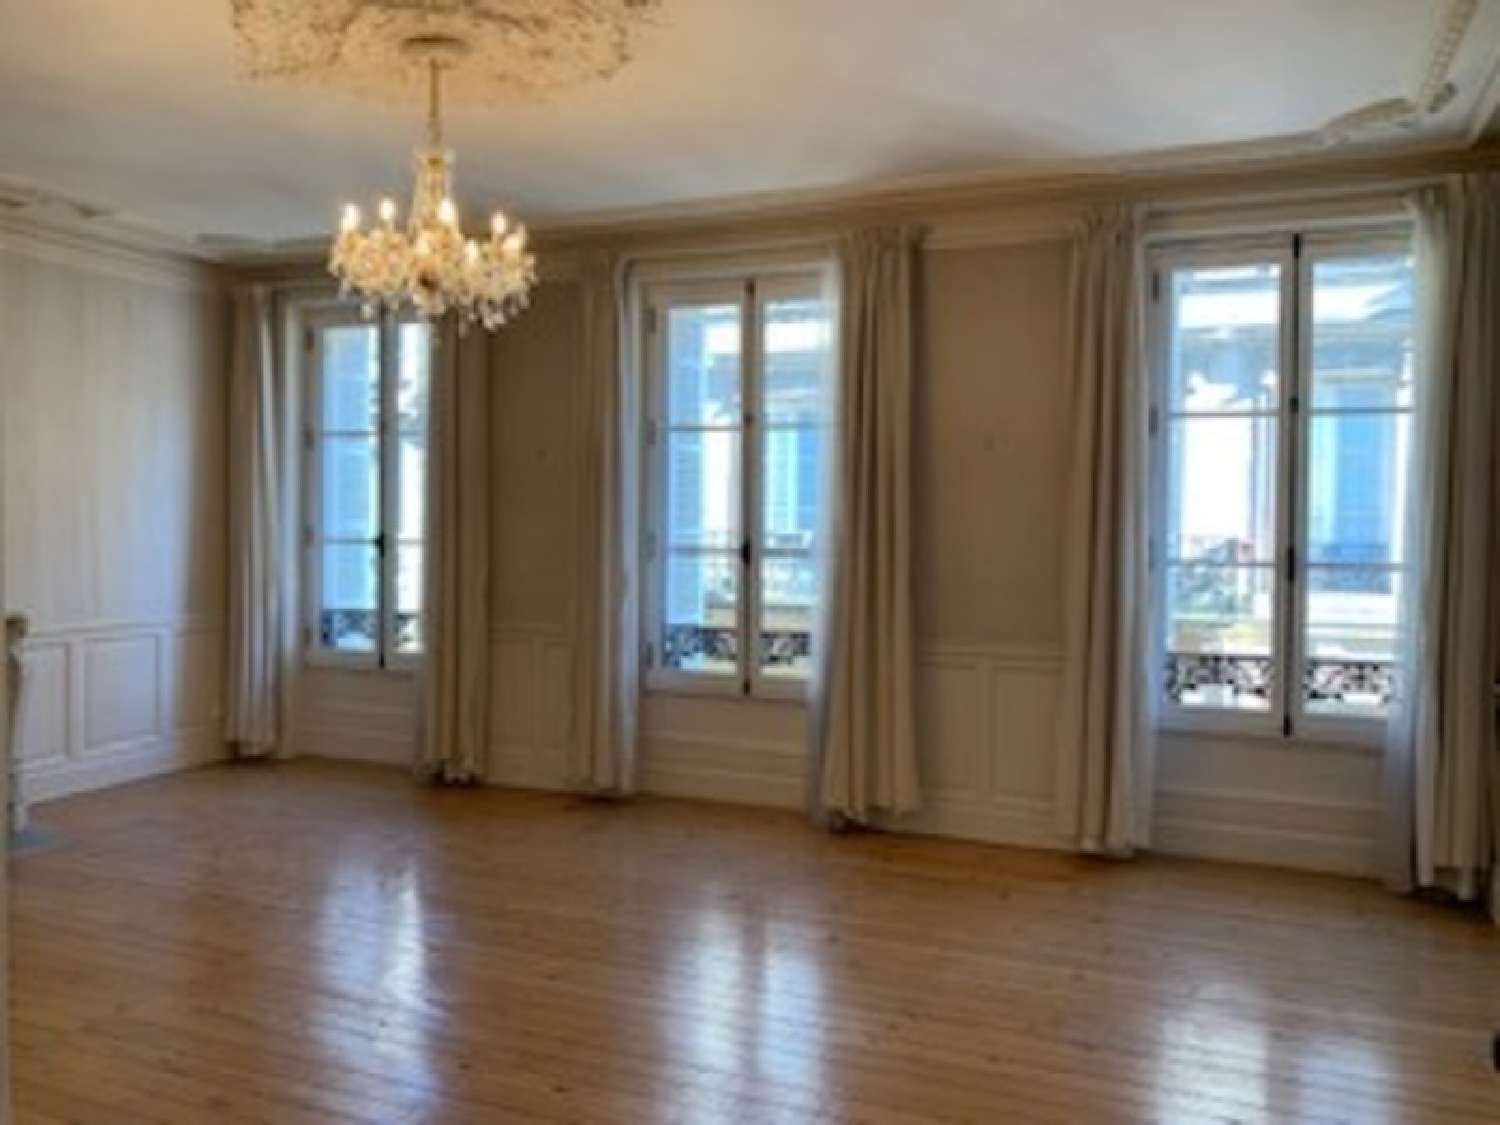  for sale apartment Bordeaux Gironde 4